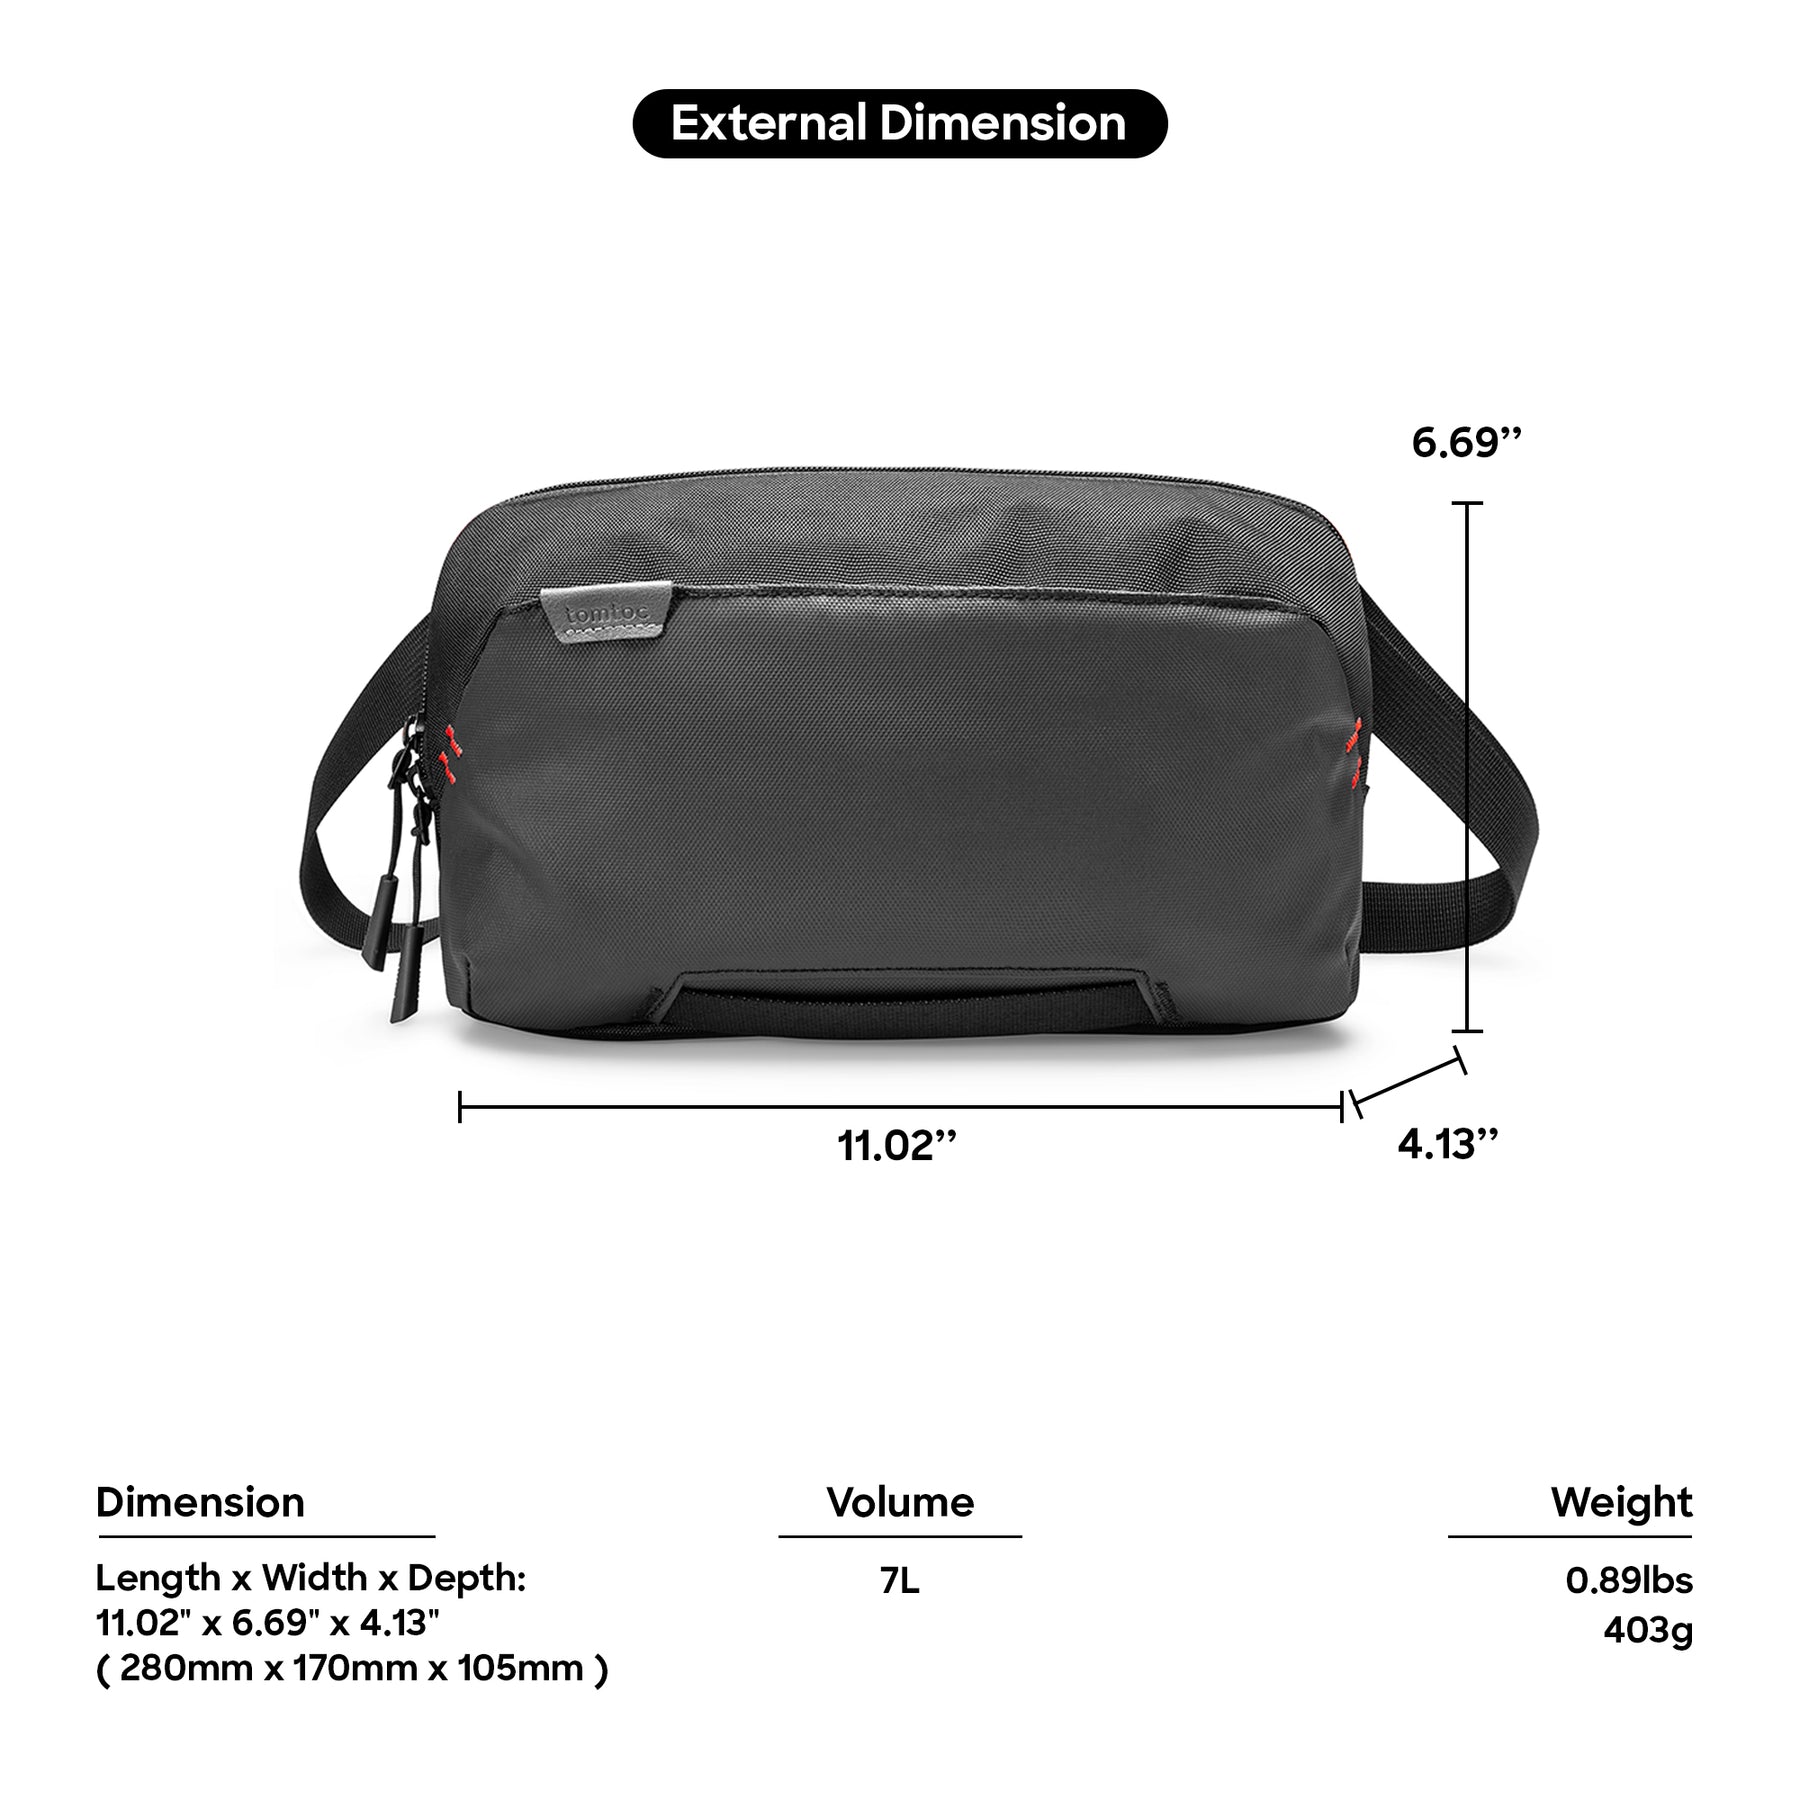 tomtoc G-Sling Crossbody Shoulder Bag / Crossbody Bag / Men Bag / Nintendo Switch Bag - Khaki